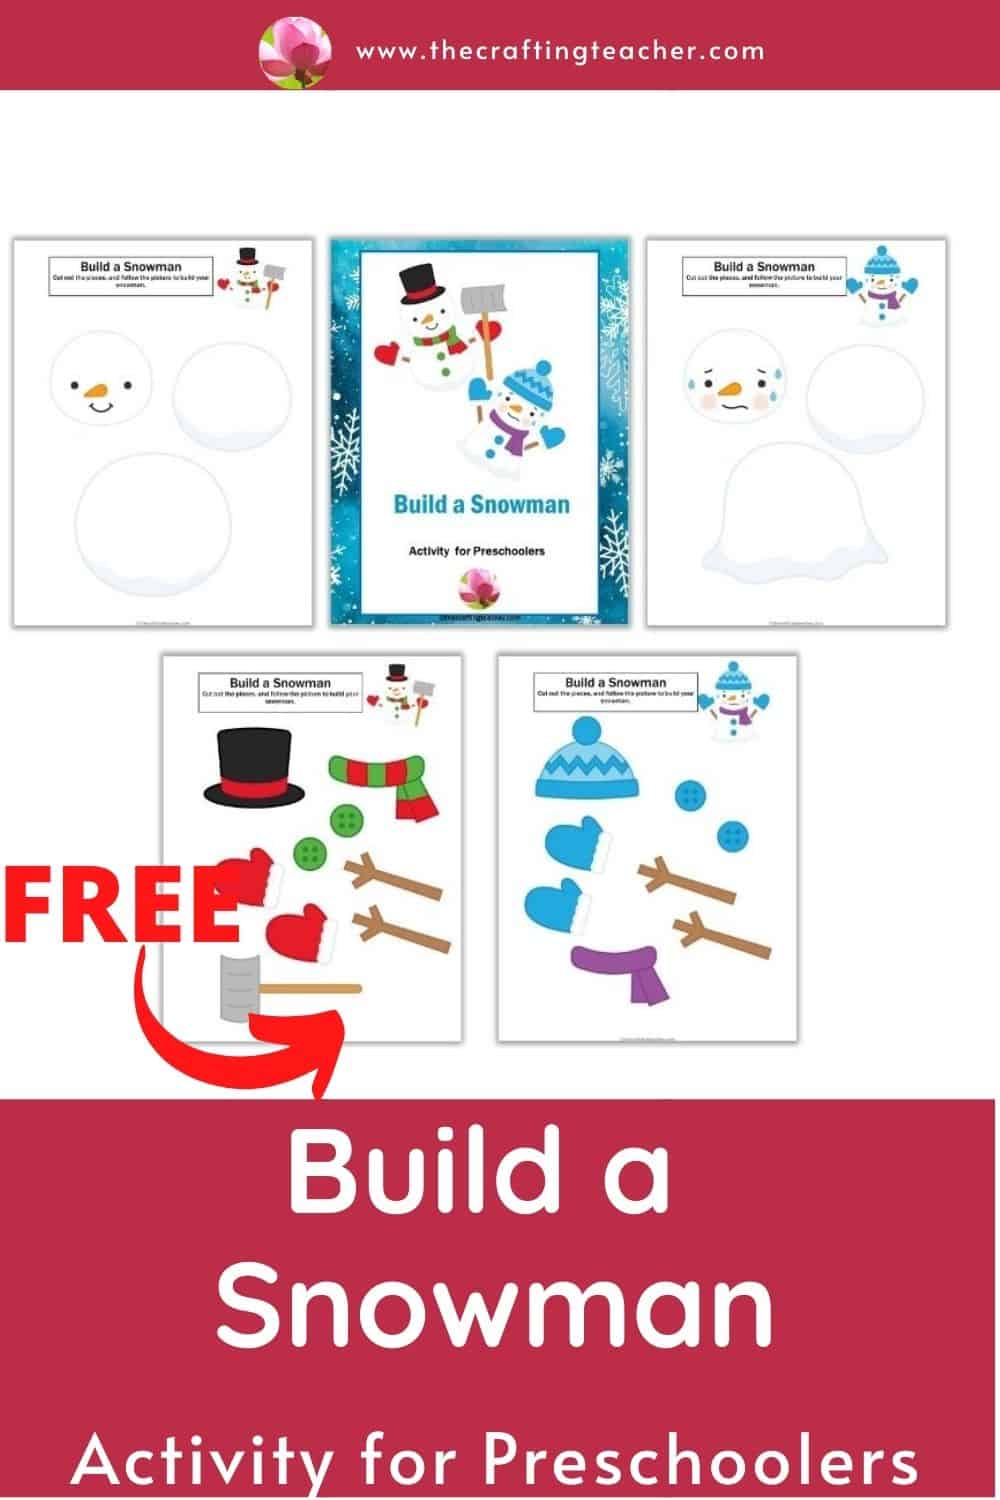 Build a Snowman Activity for Preschoolers - The Crafting Teacher